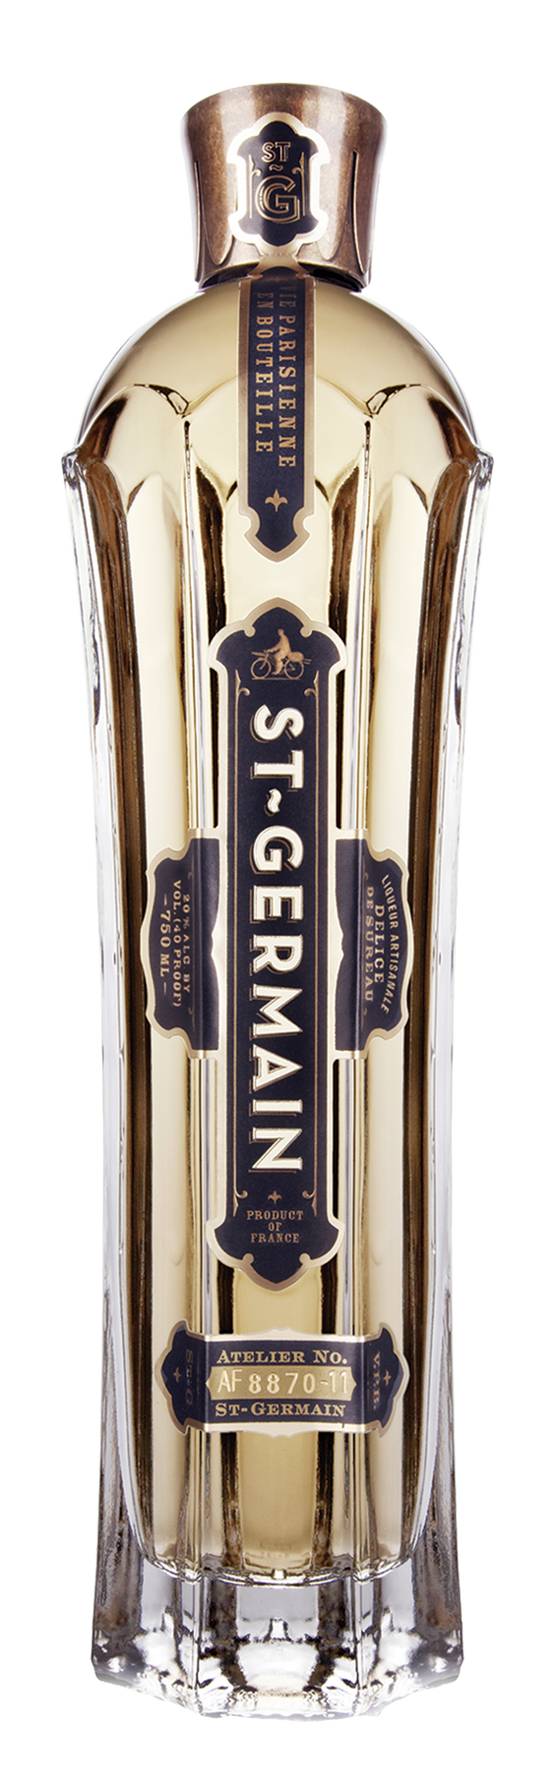 St-germain licor de saúco (750 ml)